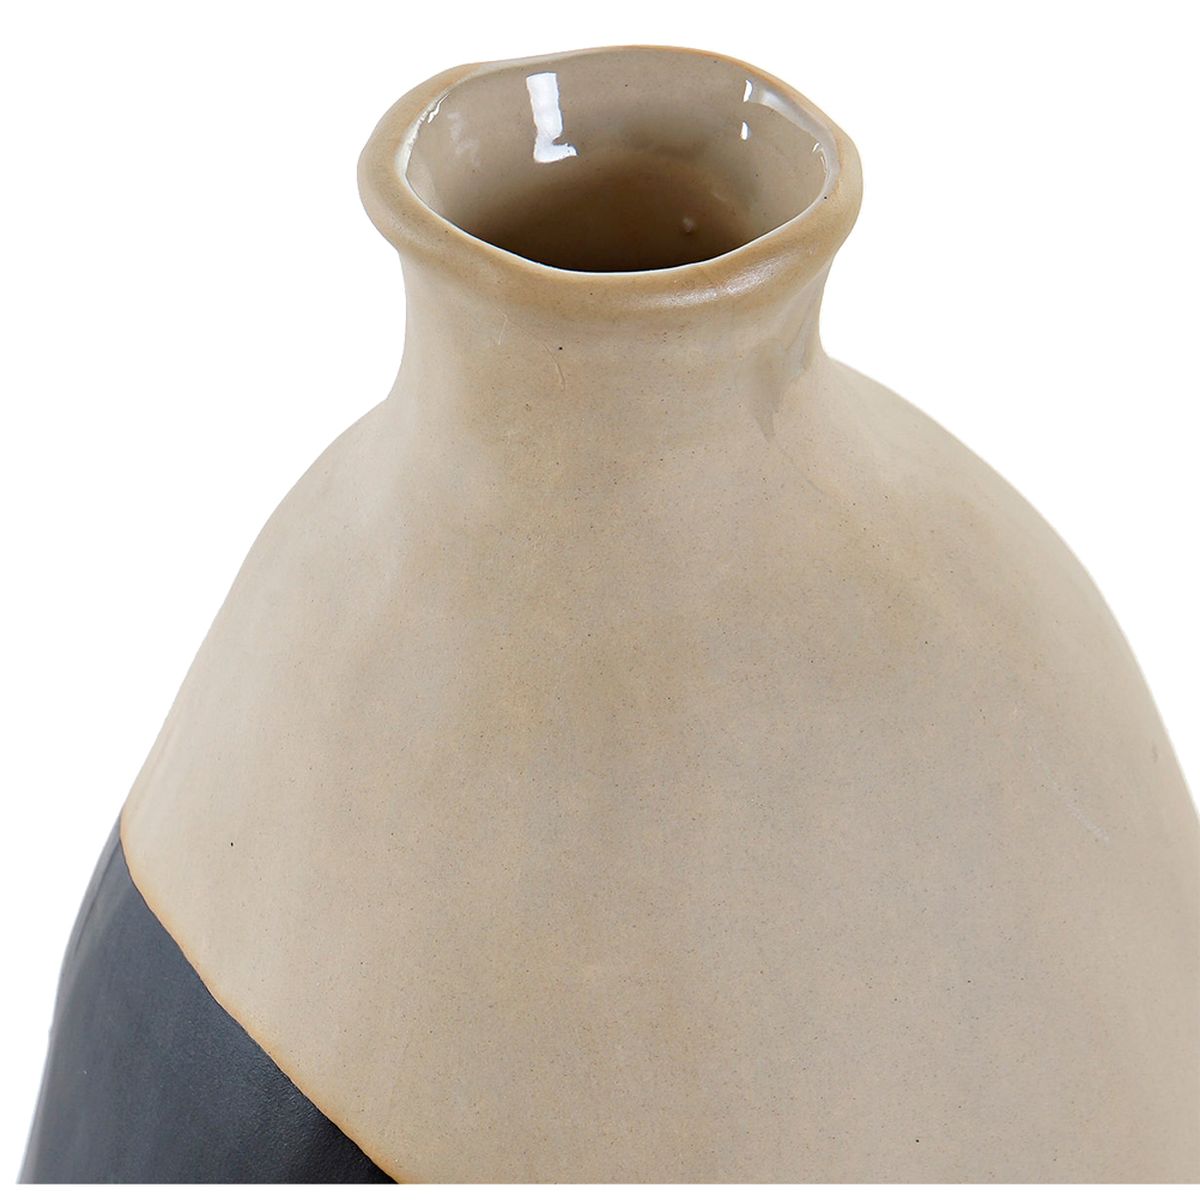 Black and beige sandstone vase 23 cm